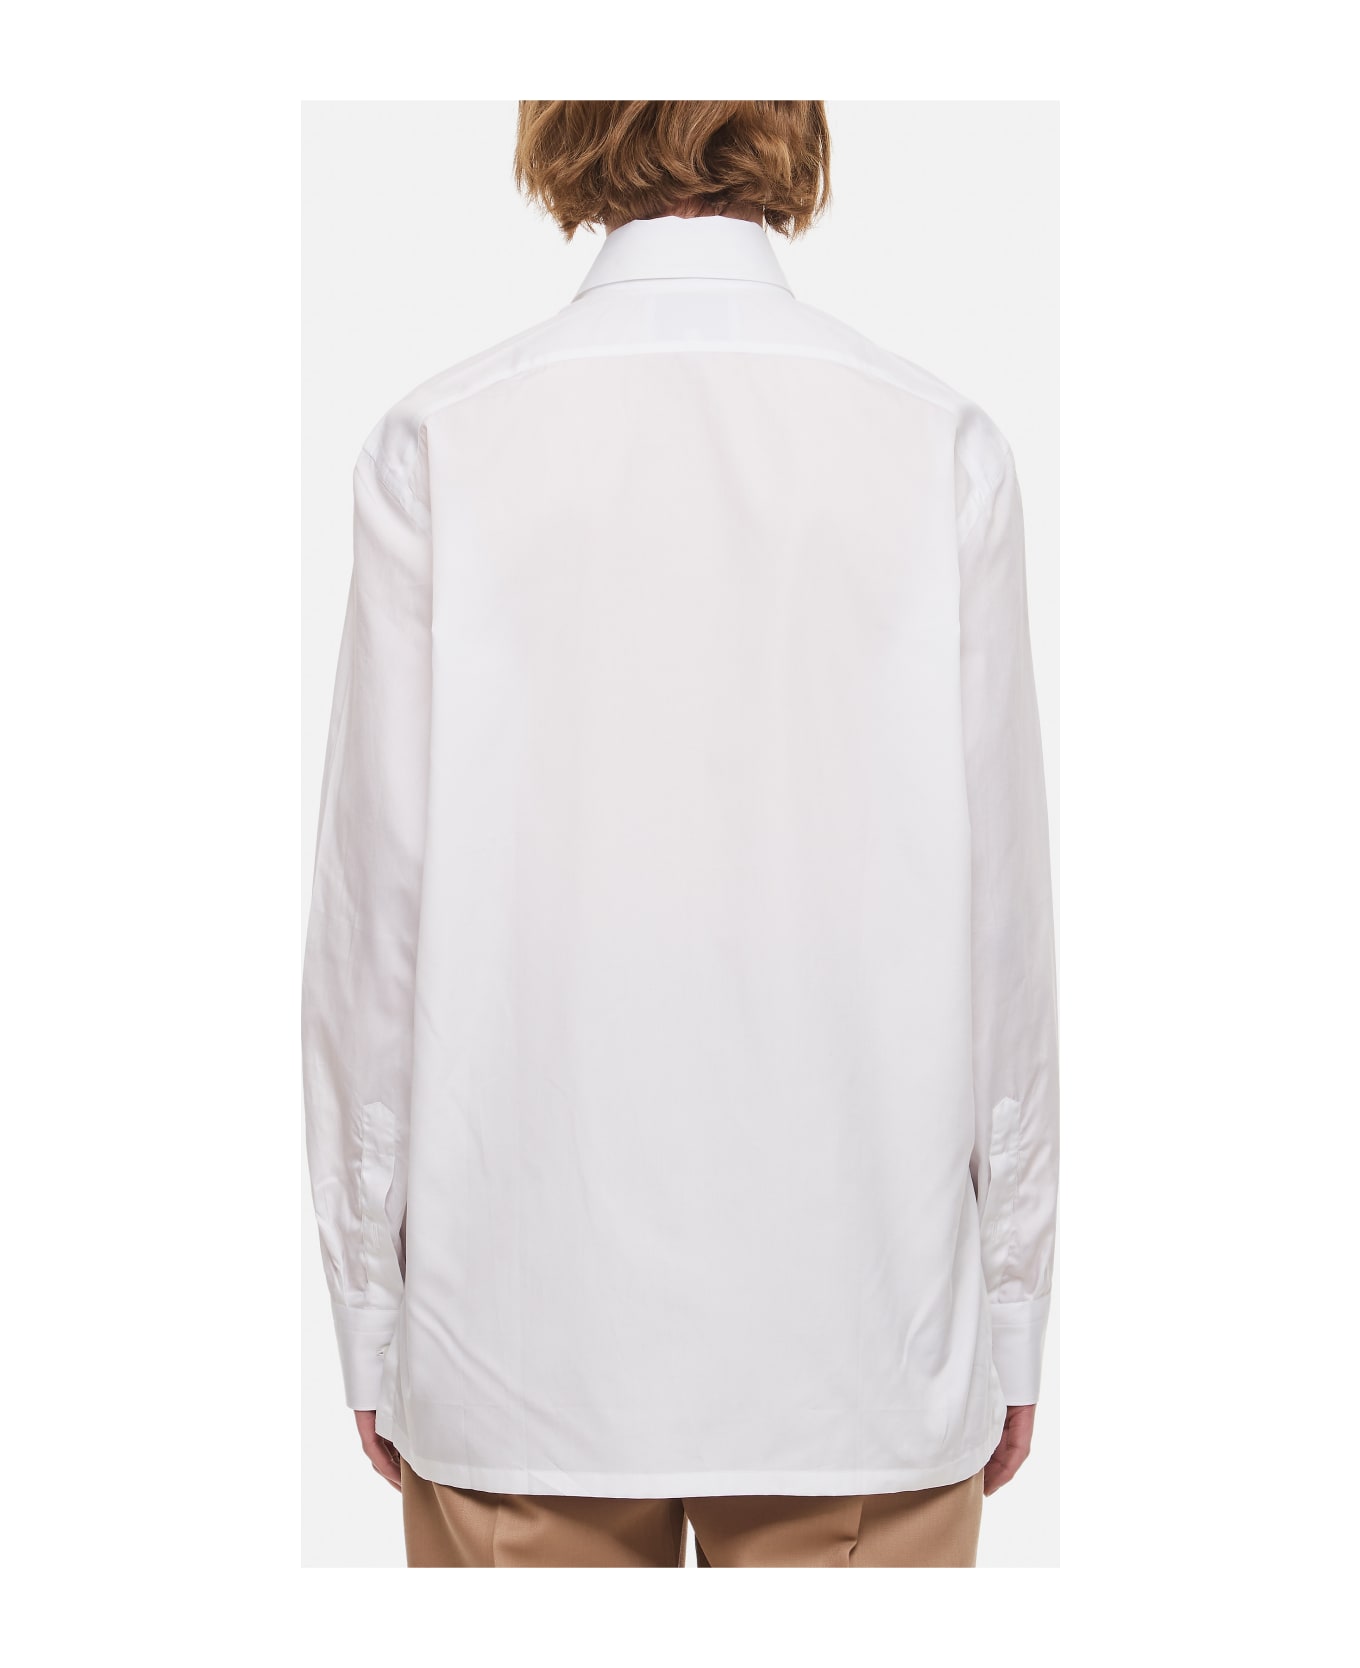 Setchu Origami Shirt - White